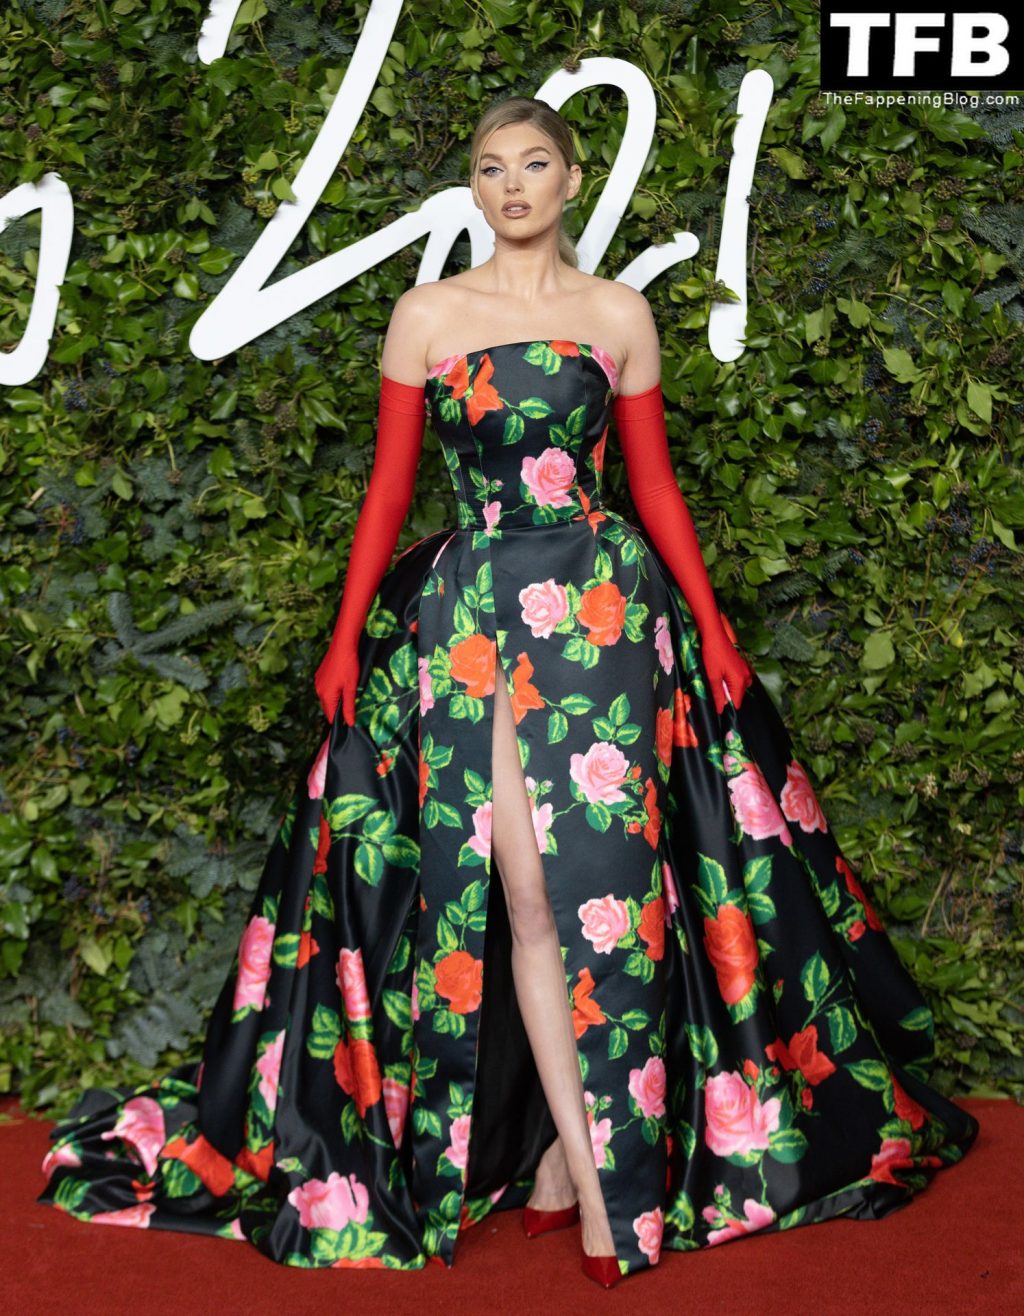 Leggy Elsa Hosk Looks Stunning at The Fashion Awards 2021 in London (45 Photos)